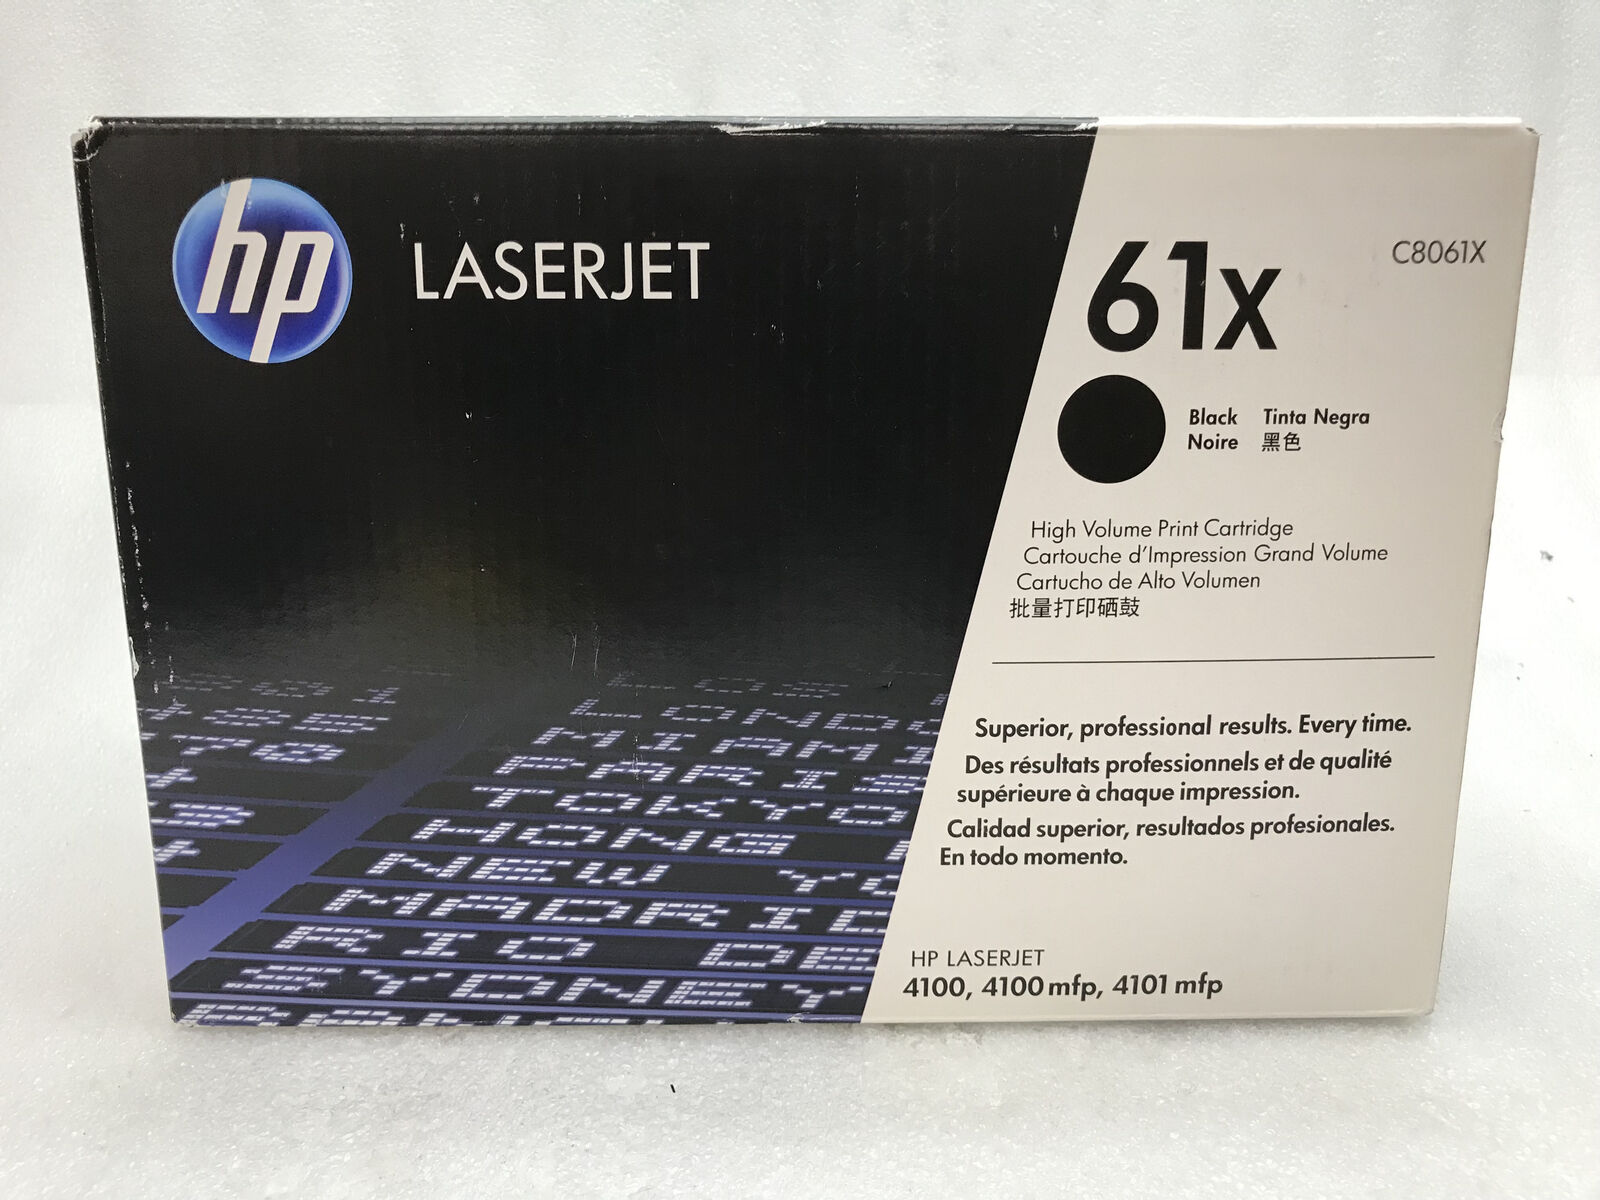 Genuine OEM Sealed HP LASERJET 61X (C8061X) High Volume Black Toner Cartridge